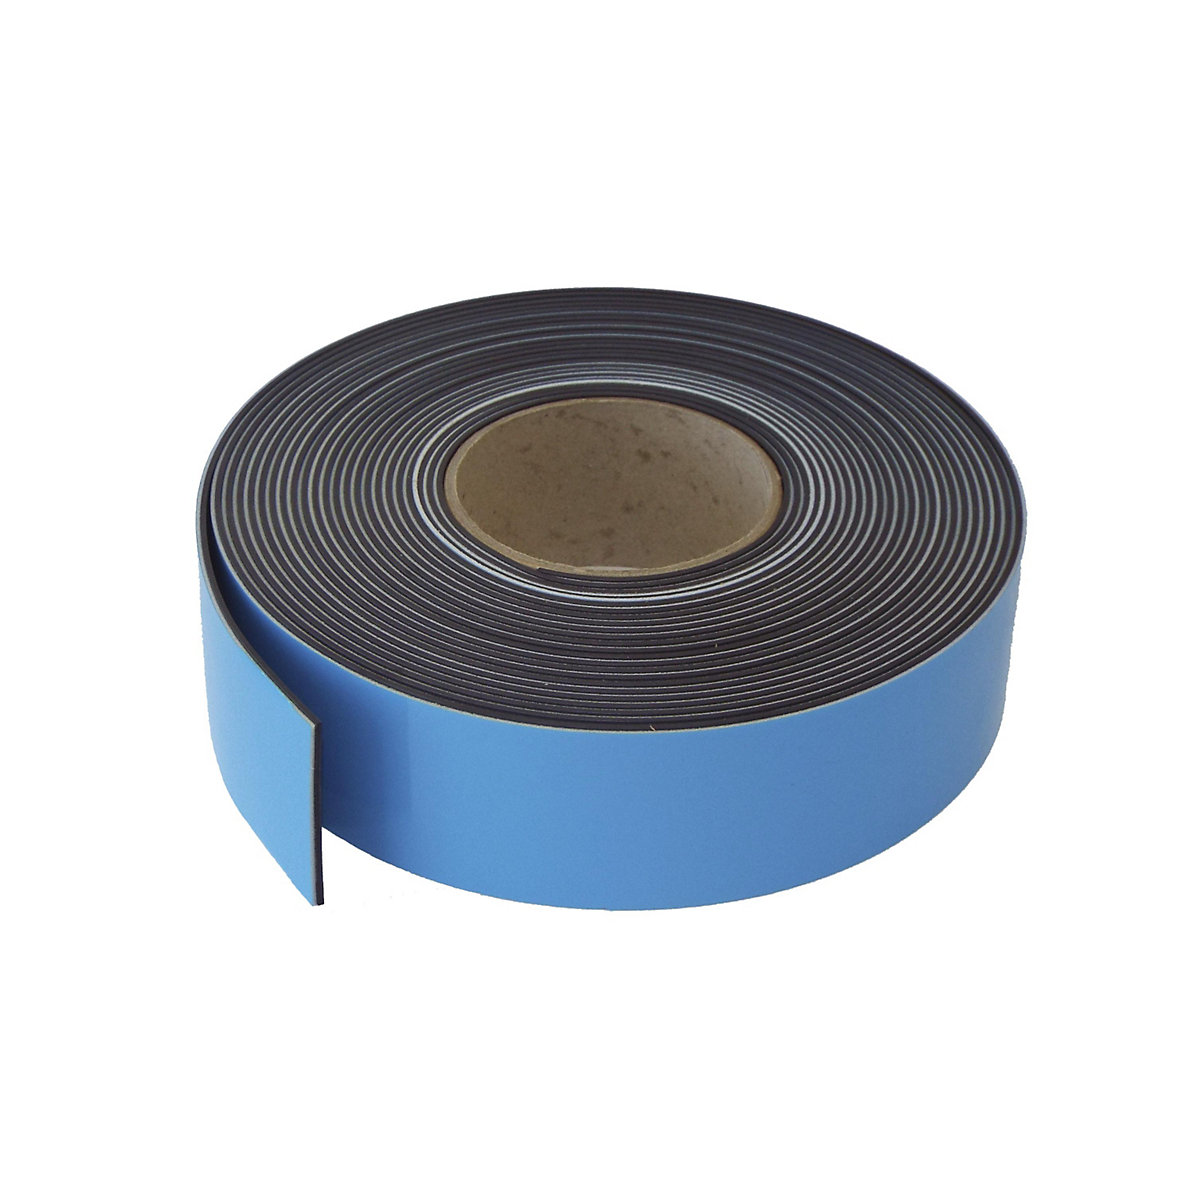 Magnetband, selbstklebend, Stärke 1,5 mm, 1 Rolle, Breite 50 mm